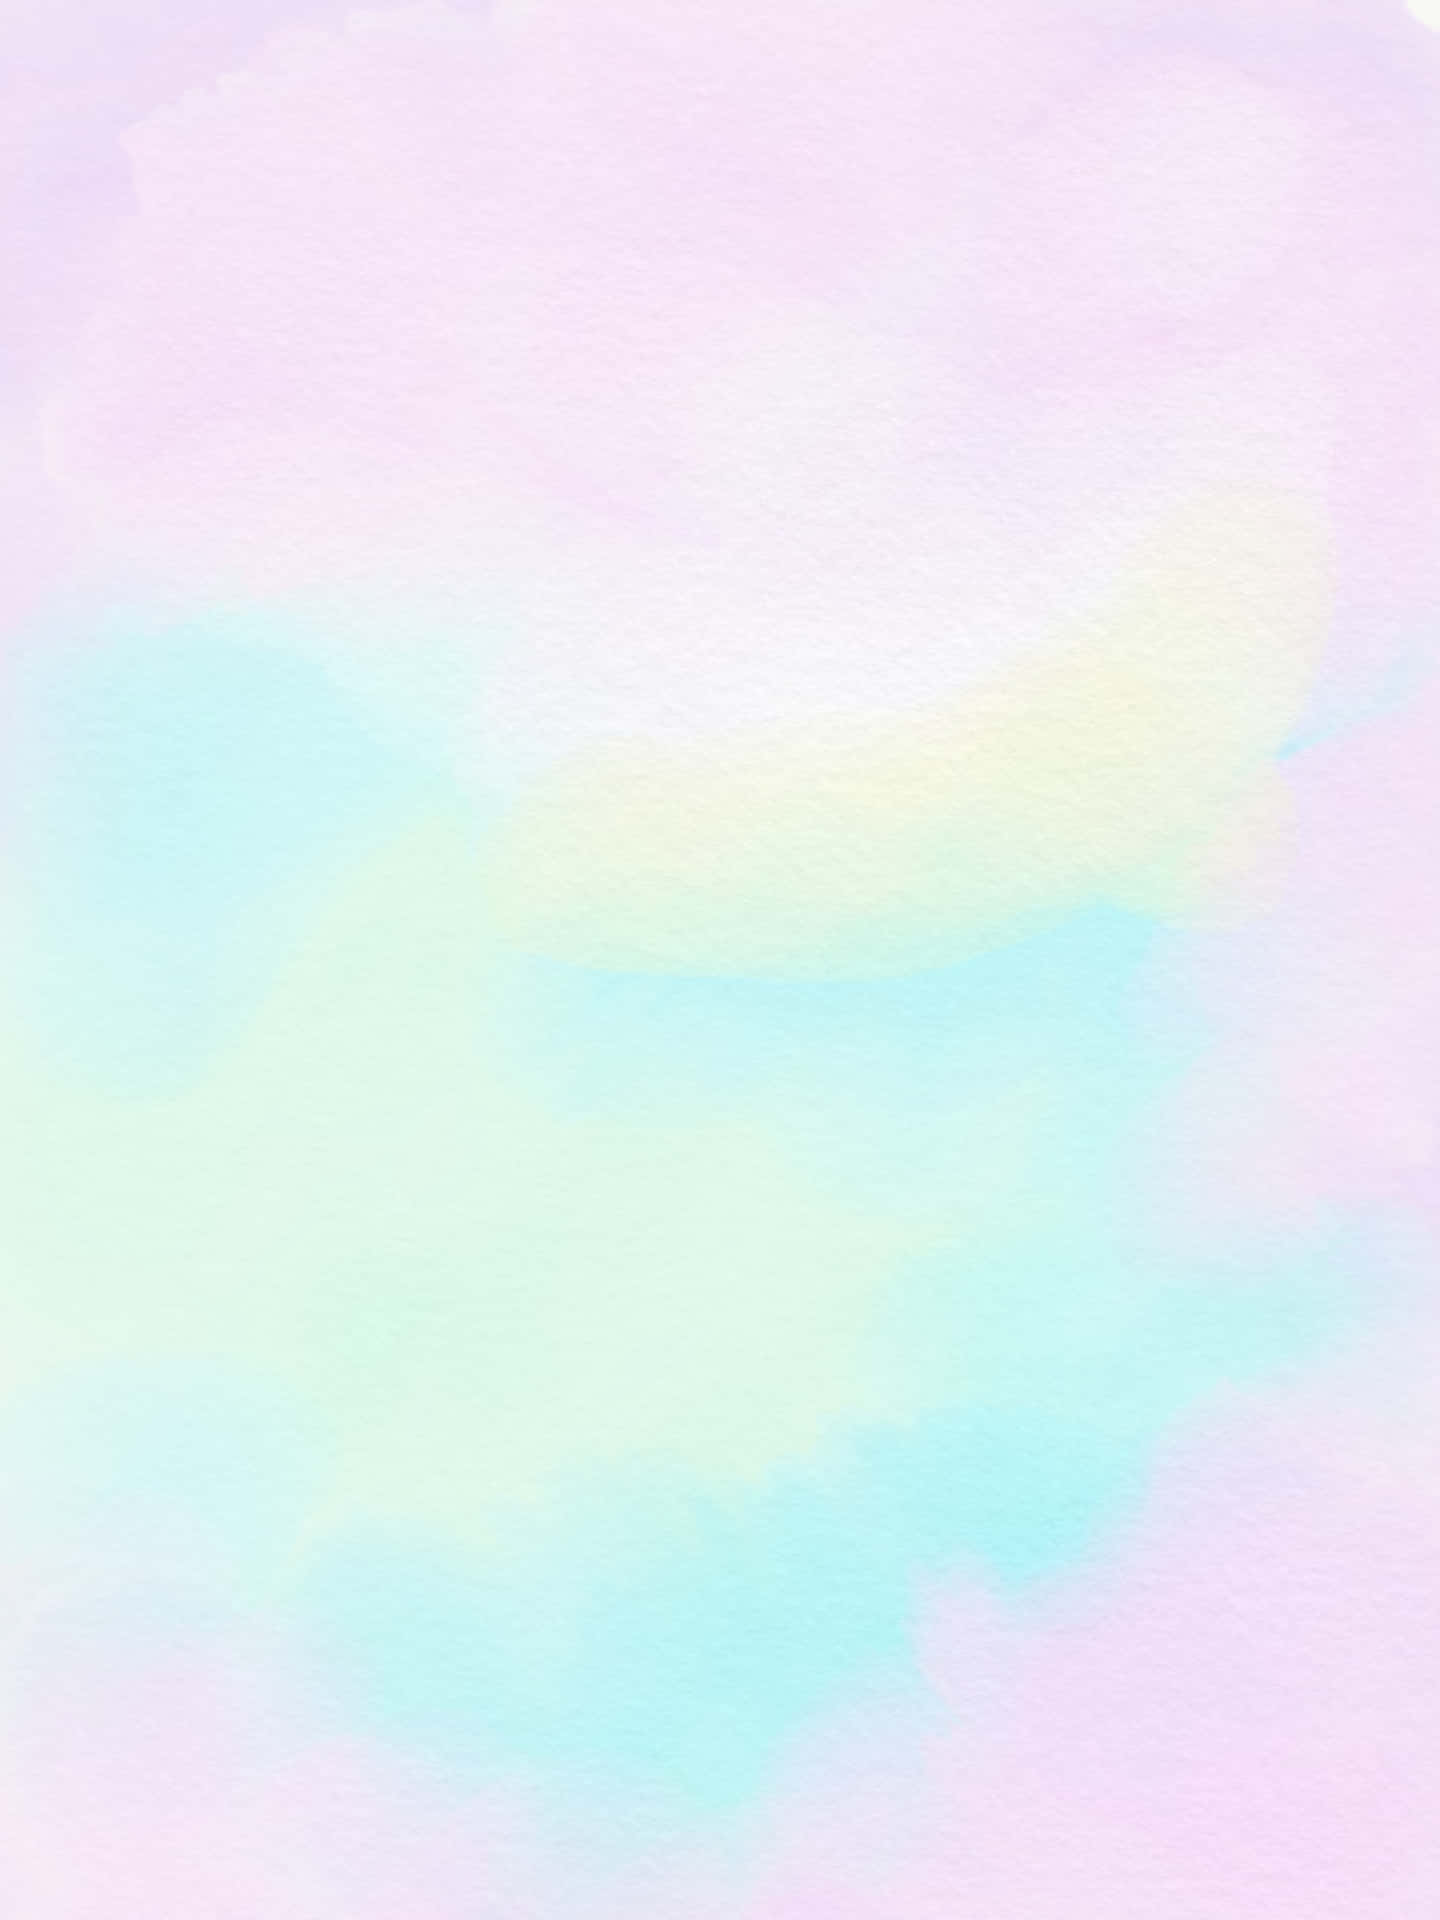 Tonossuaves De Rosa Y Azul Con Un Efecto Pintoresco Fondo de pantalla